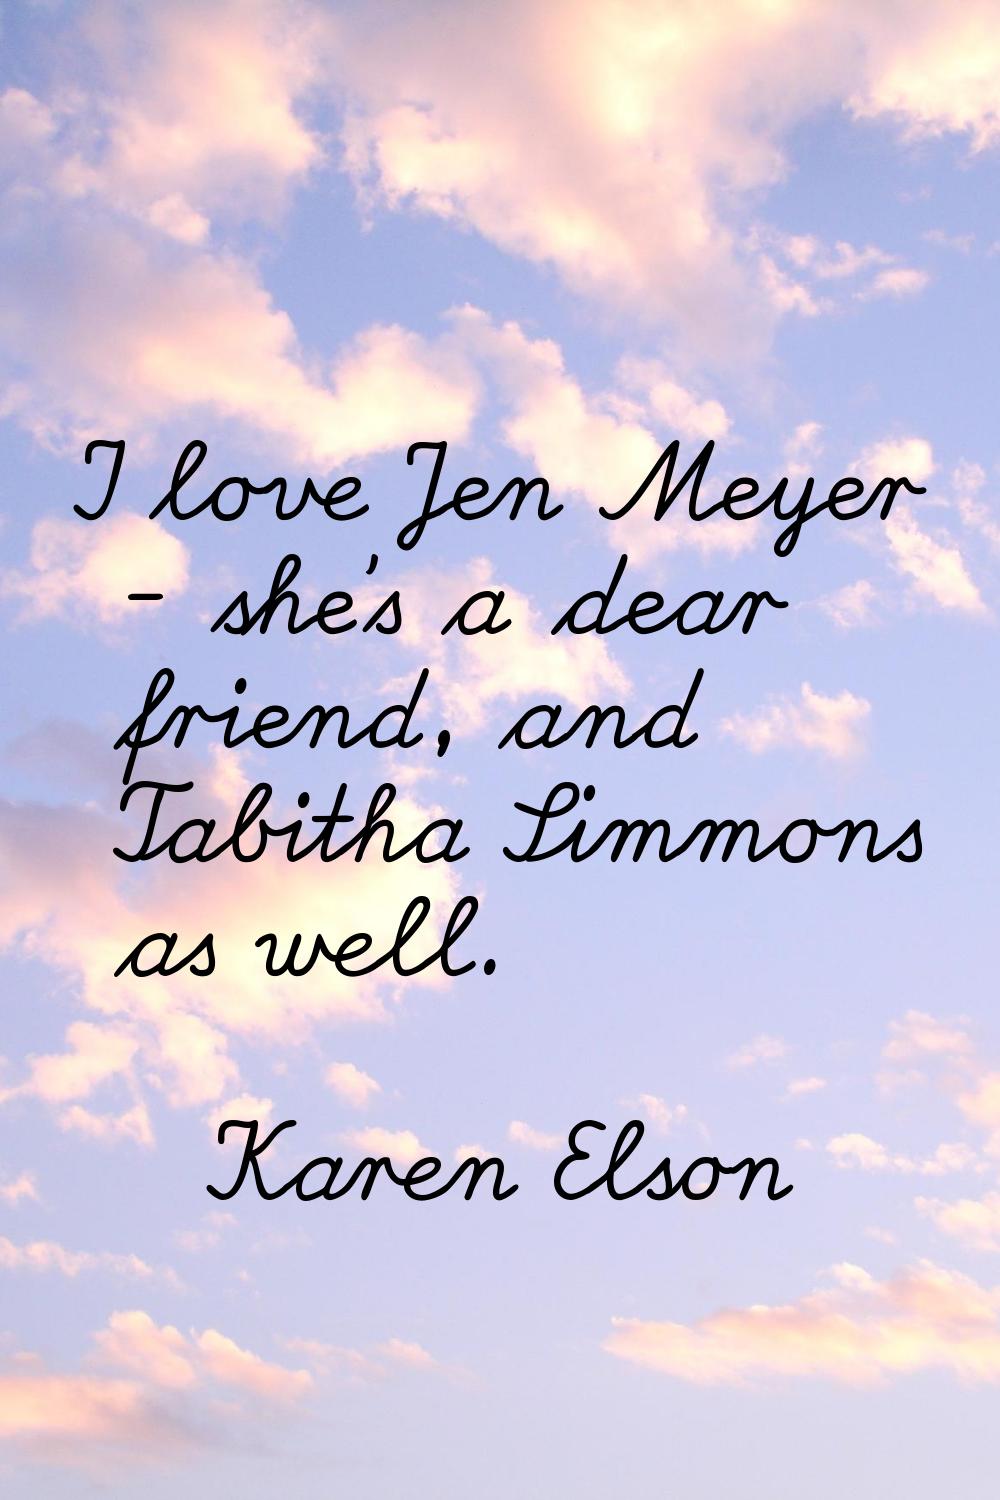 I love Jen Meyer - she's a dear friend, and Tabitha Simmons as well.